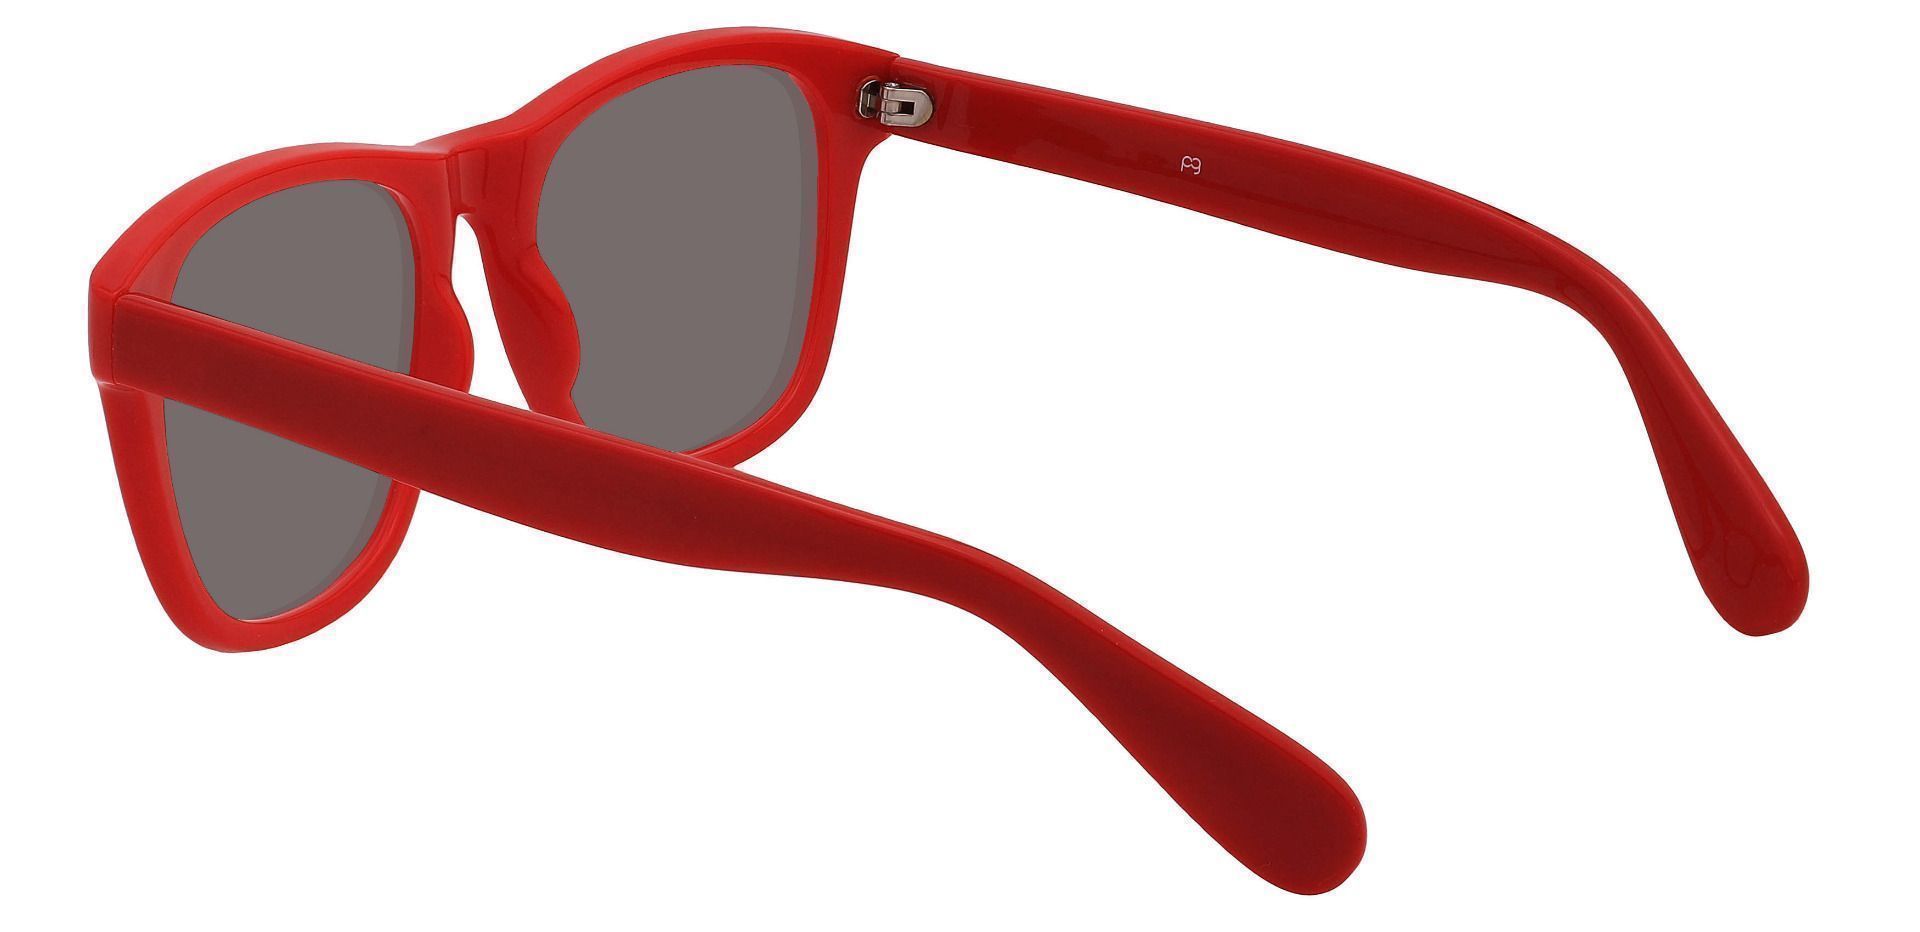 Yolanda Square Prescription Sunglasses - Red Frame With Gray Lenses